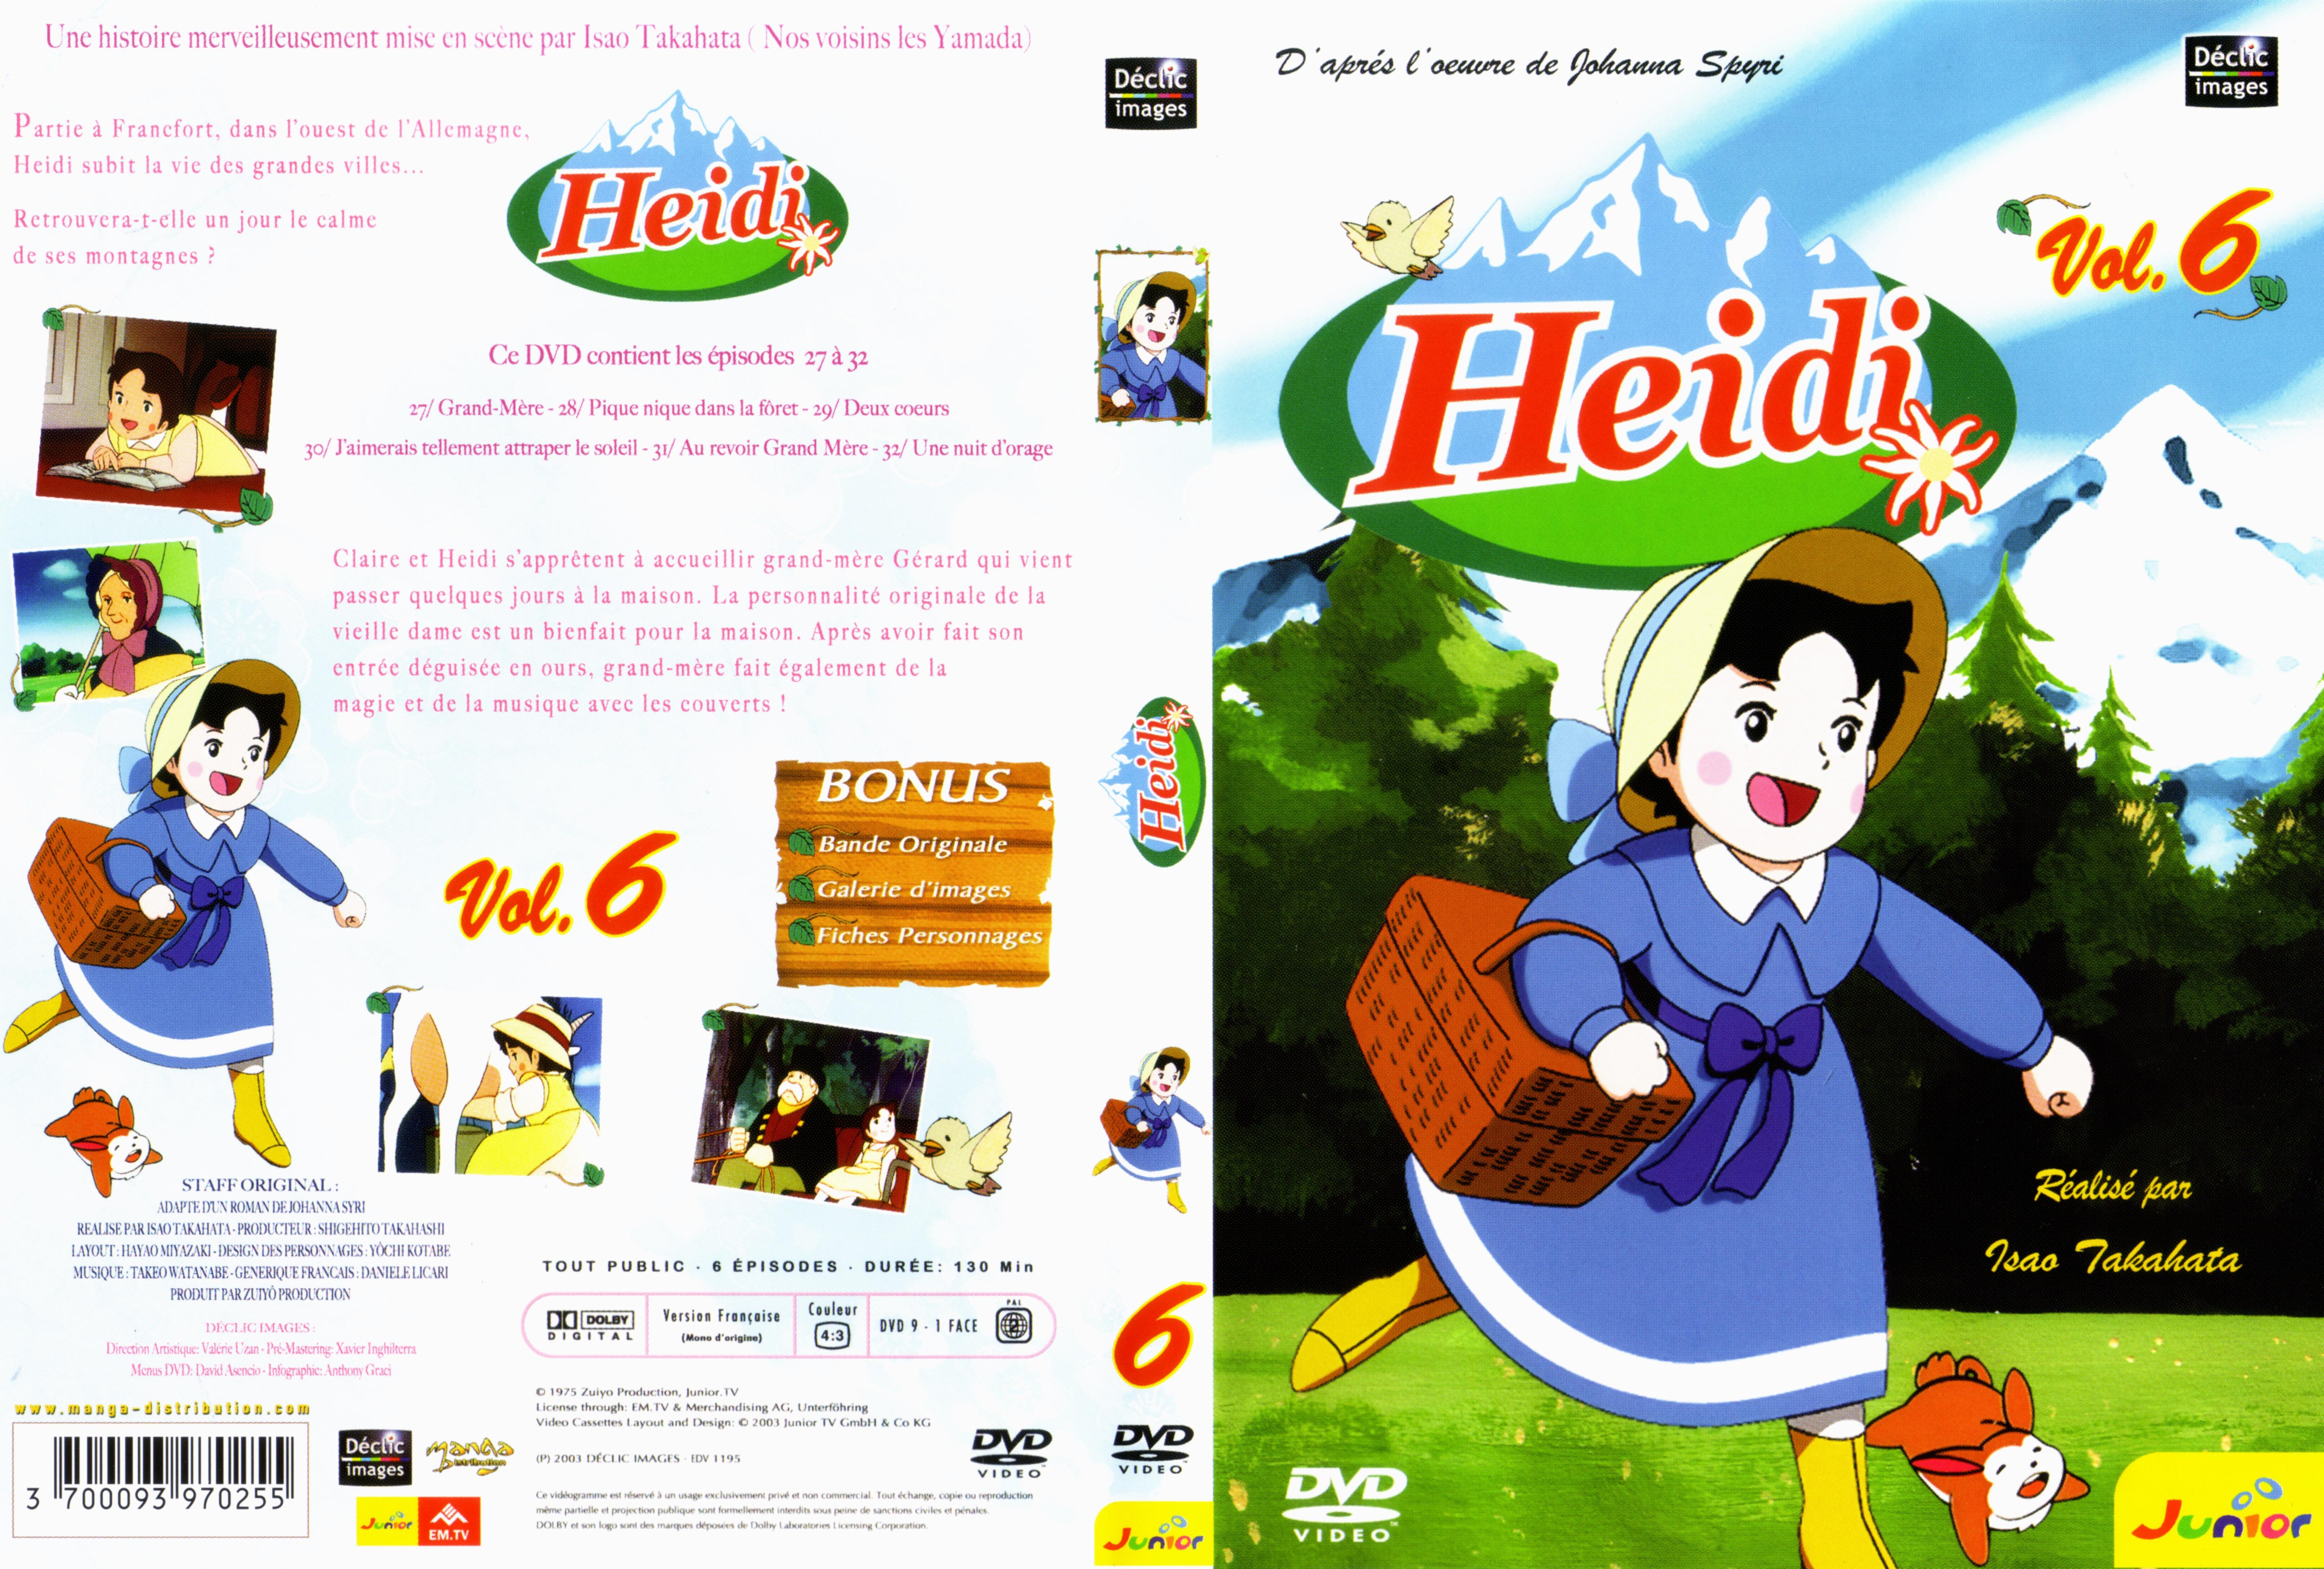 Jaquette DVD Heidi DVD 06